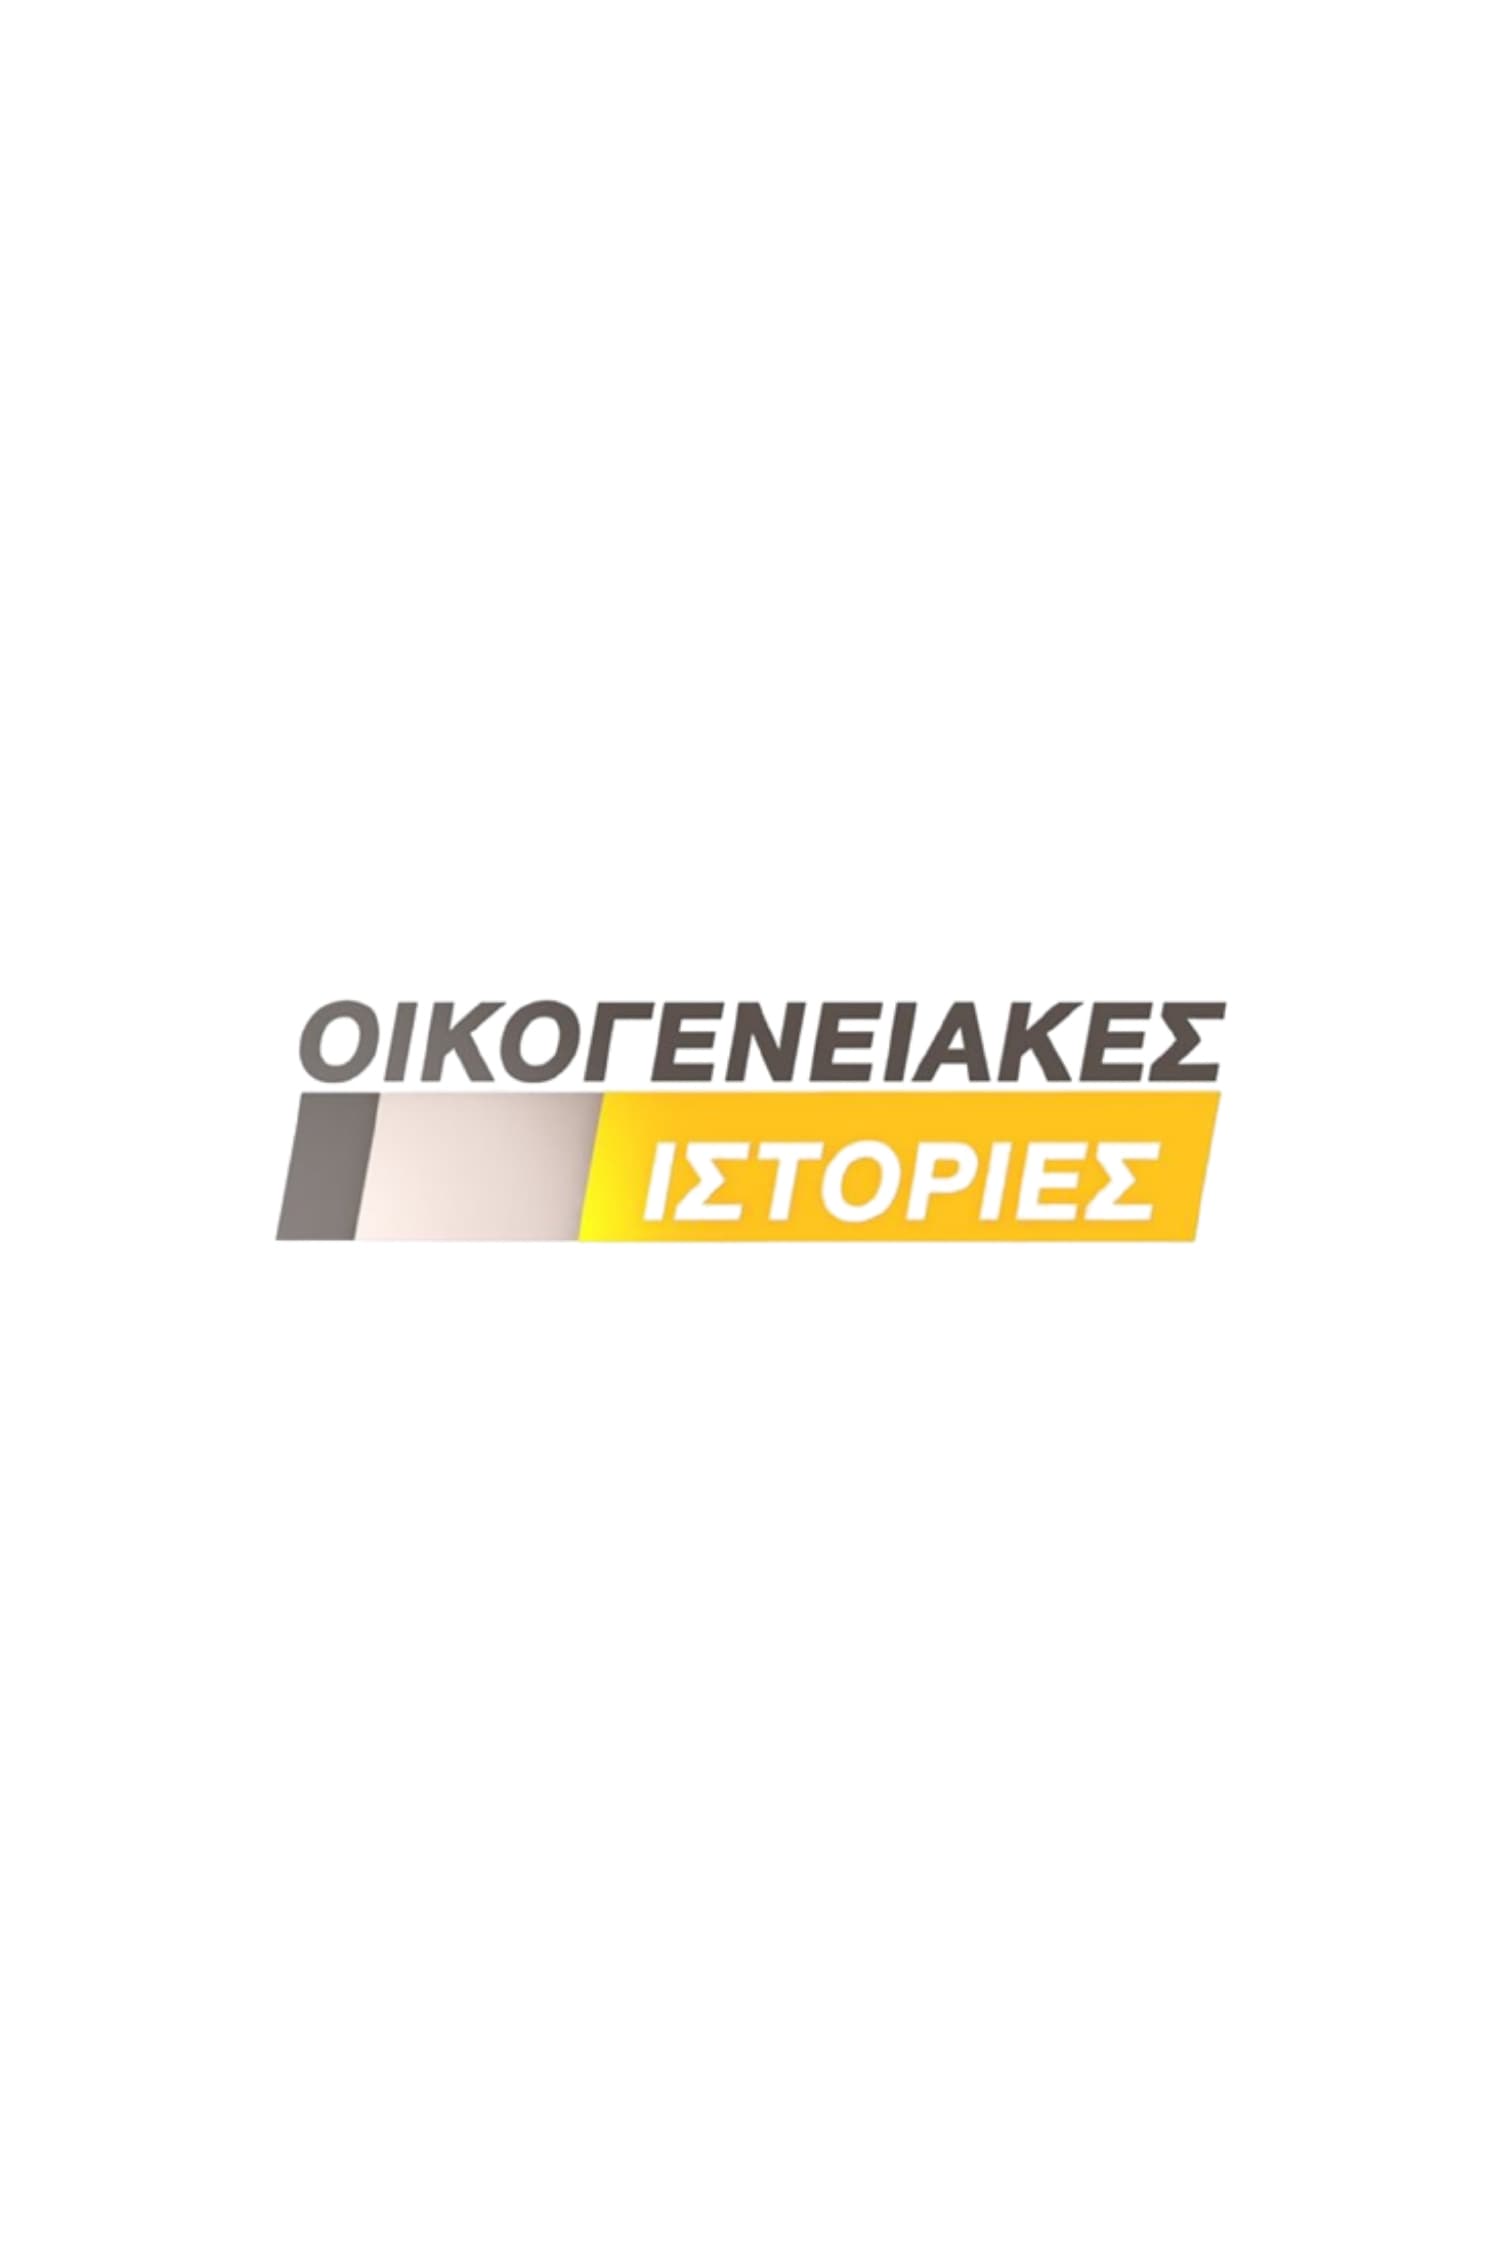 TV ratings for Oikogeneiakes Istories (Οικογενειακες Ιστορίες) in Netherlands. Alpha TV TV series